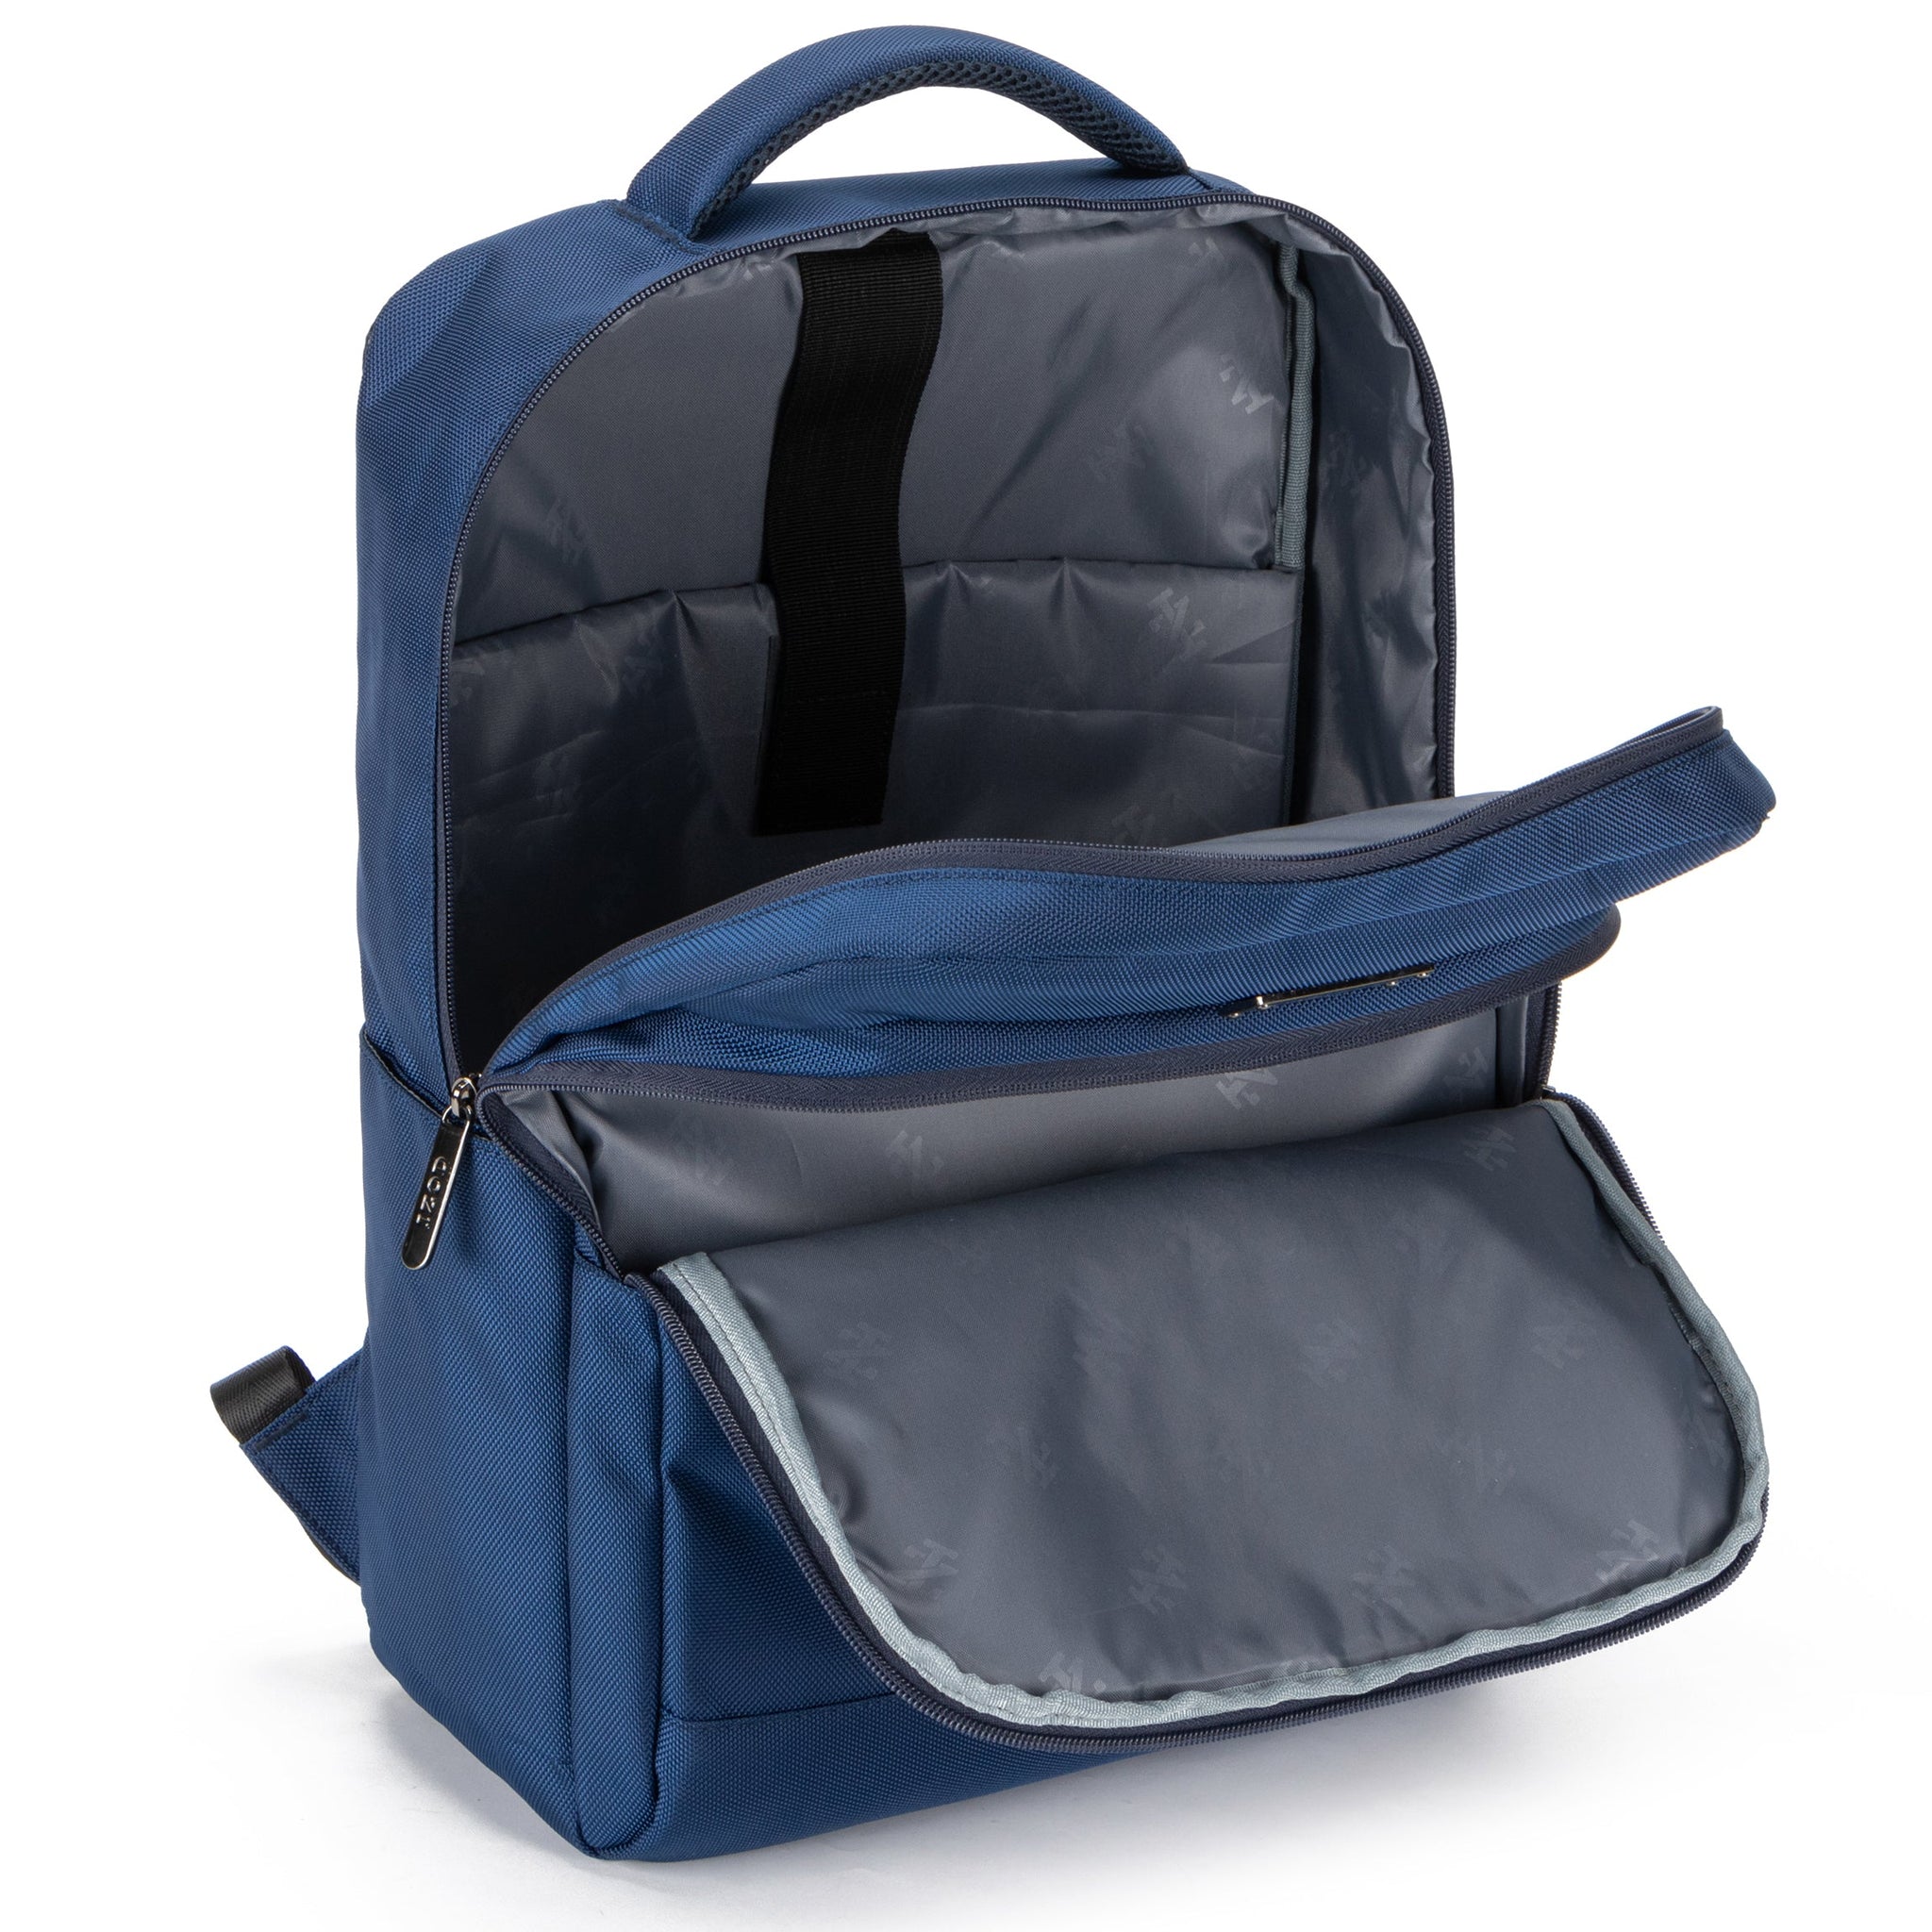 IZOD ALCI Slim 15.6" Laptop Backpack with USB Charging Port